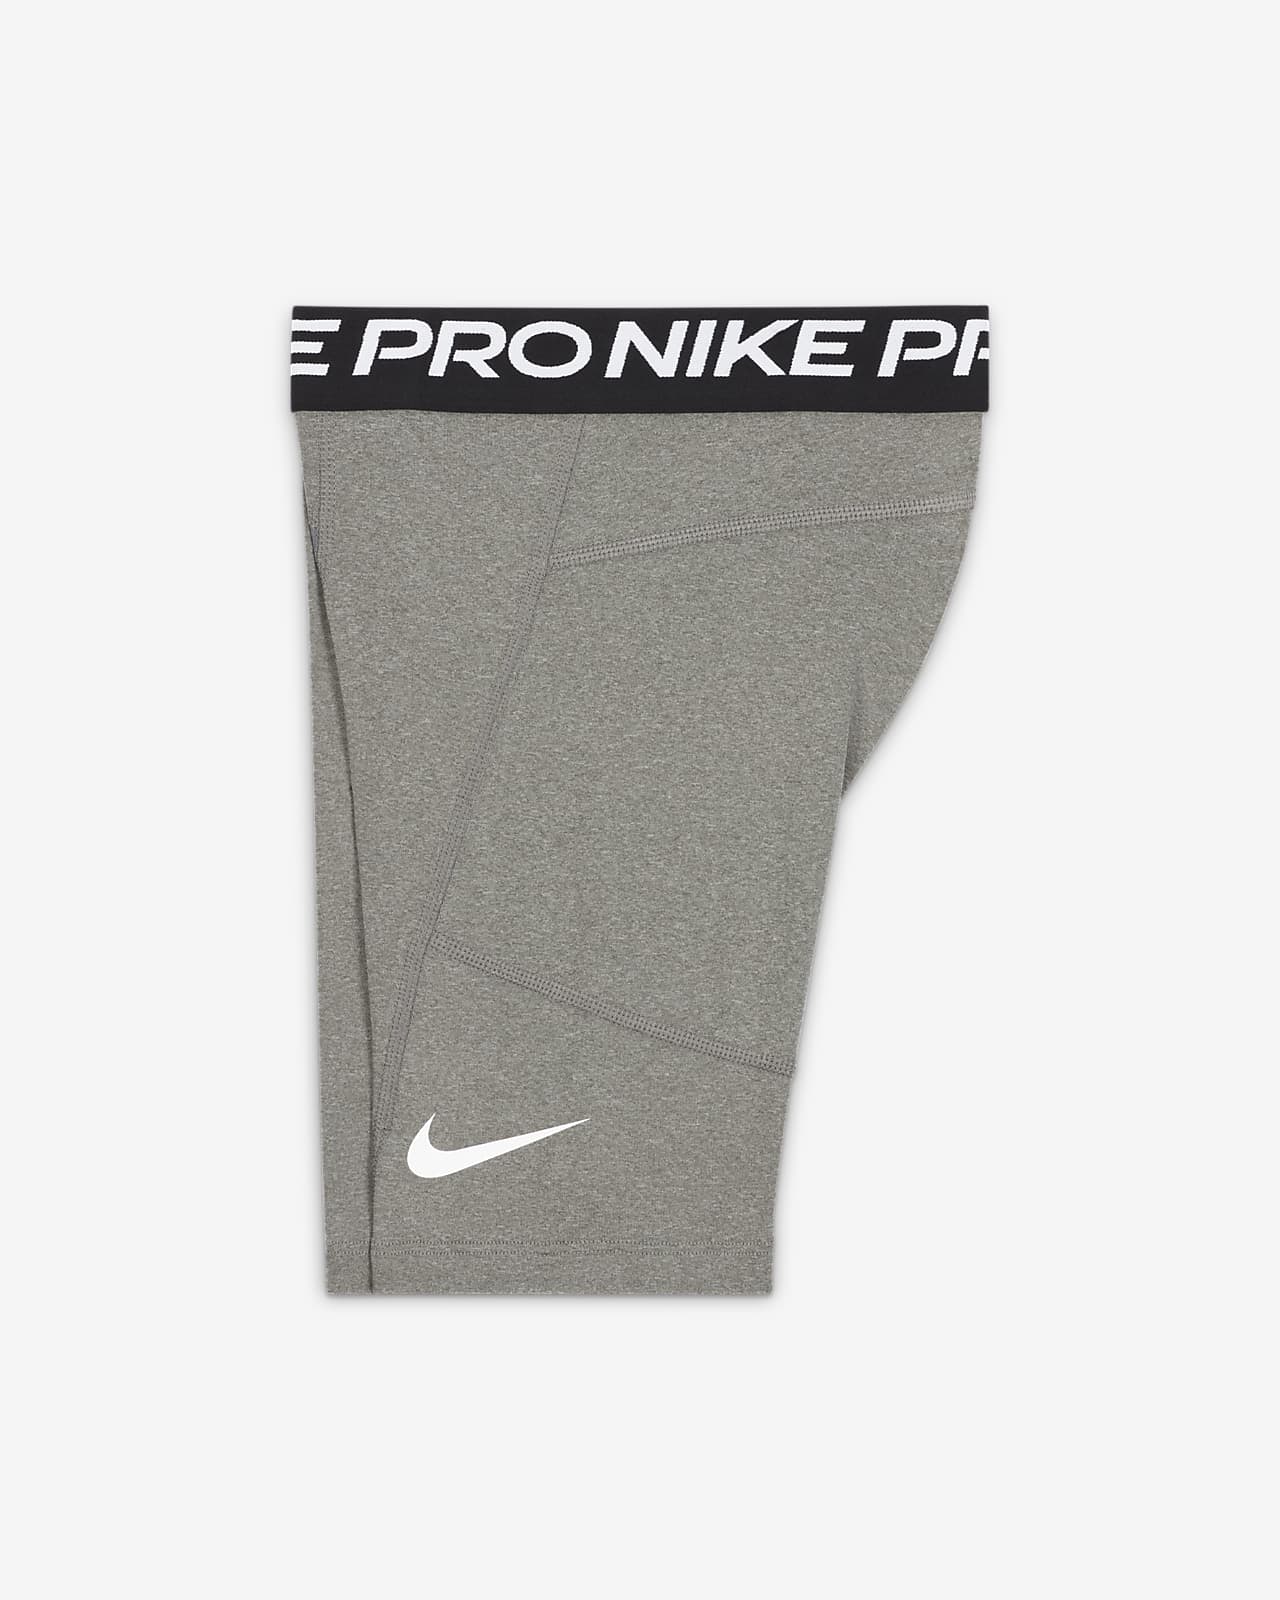 Boys Nike Pro Compression Shorts